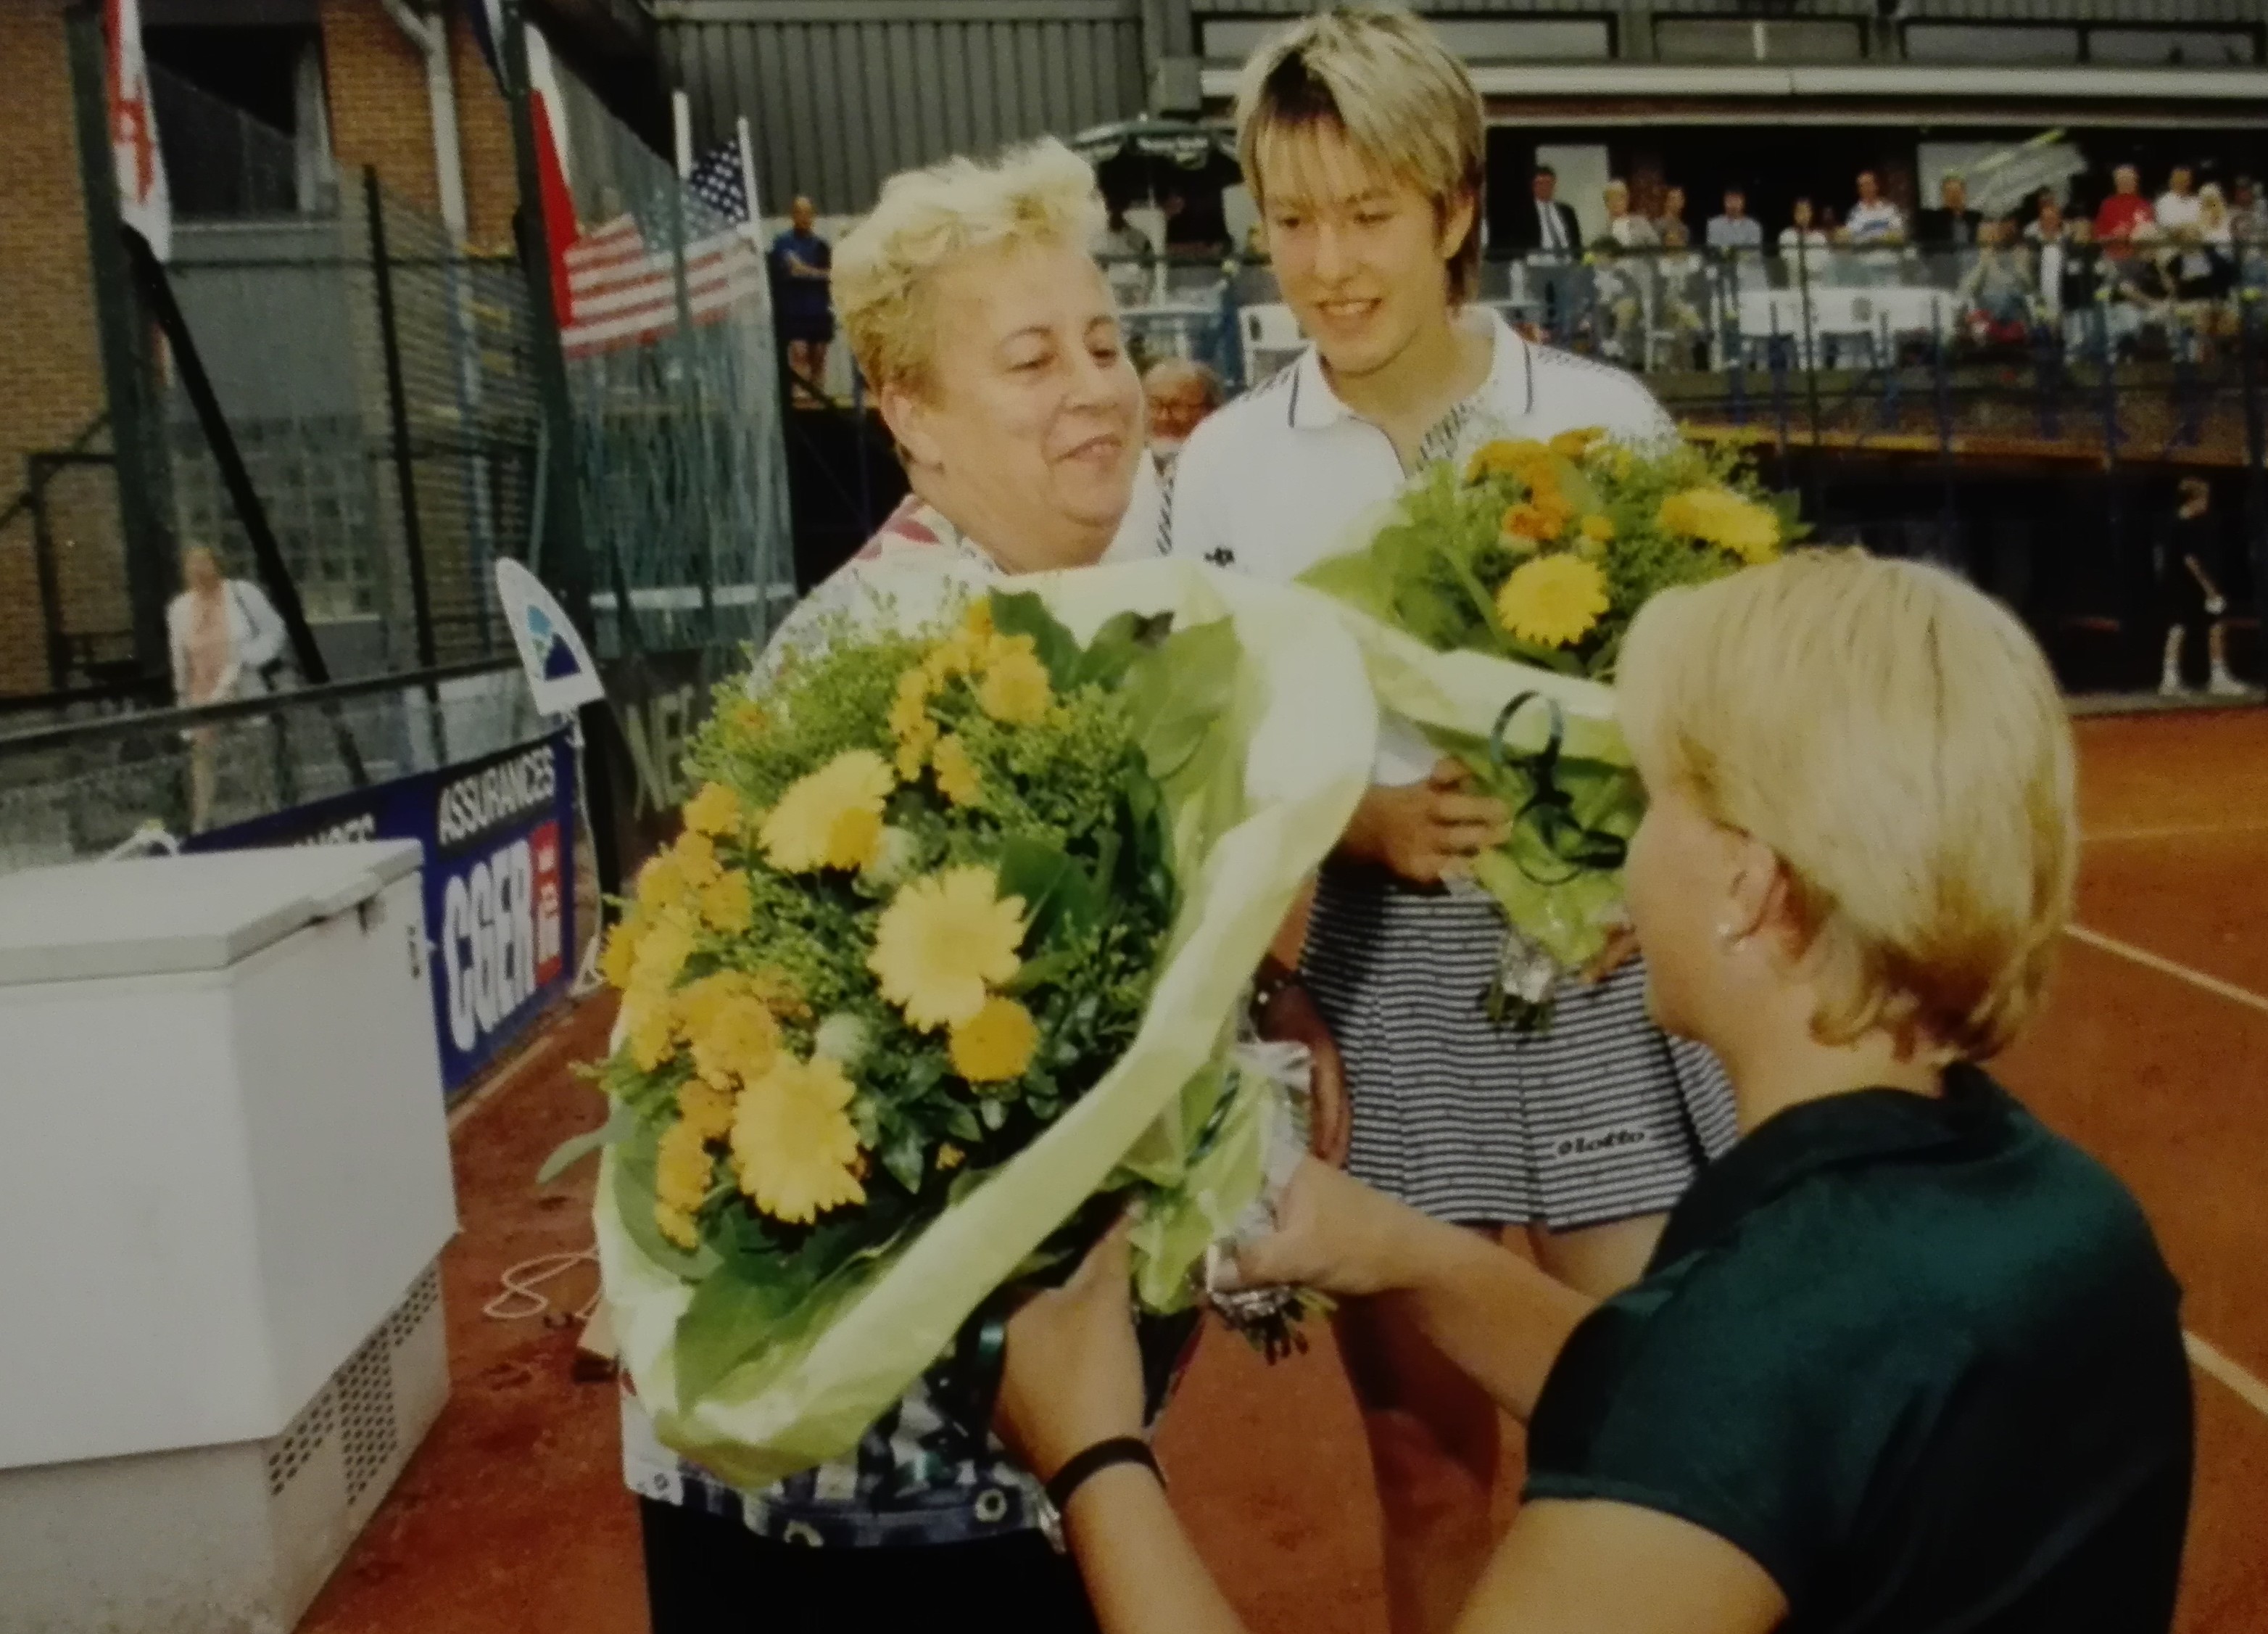 Exhibition 1997 - Justine Henin et Esther Vergeer